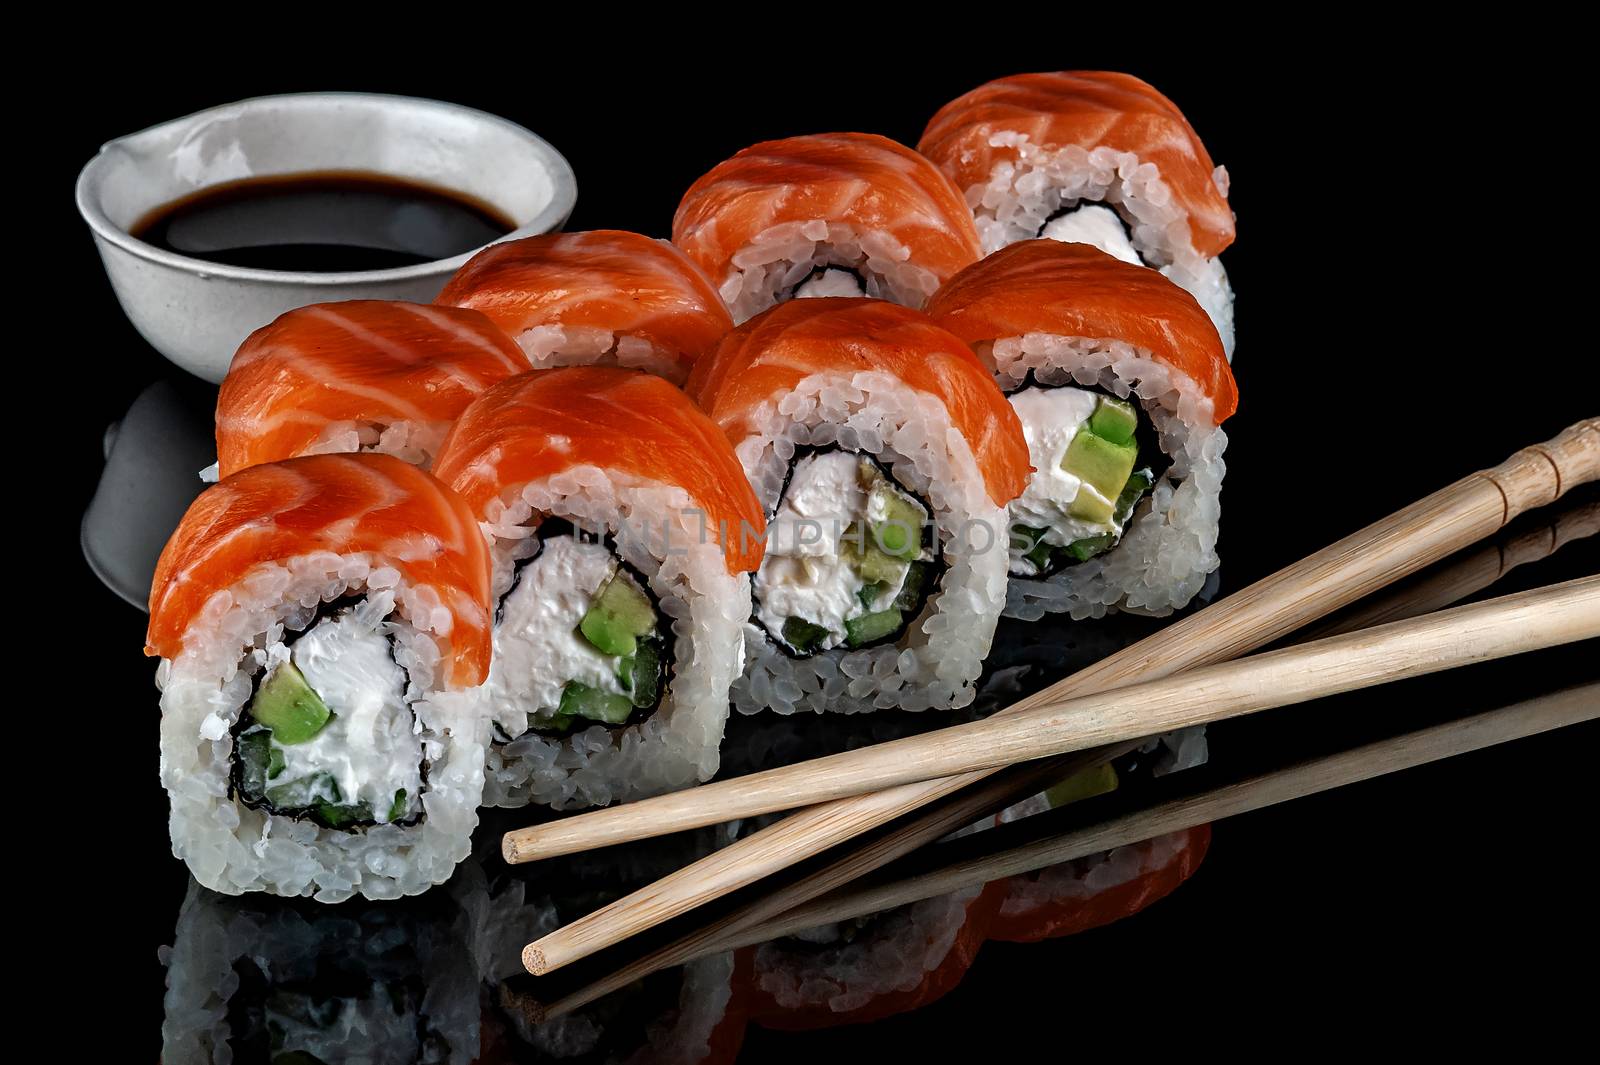 Philadelphia sushi rolls with chopsticks by Cipariss